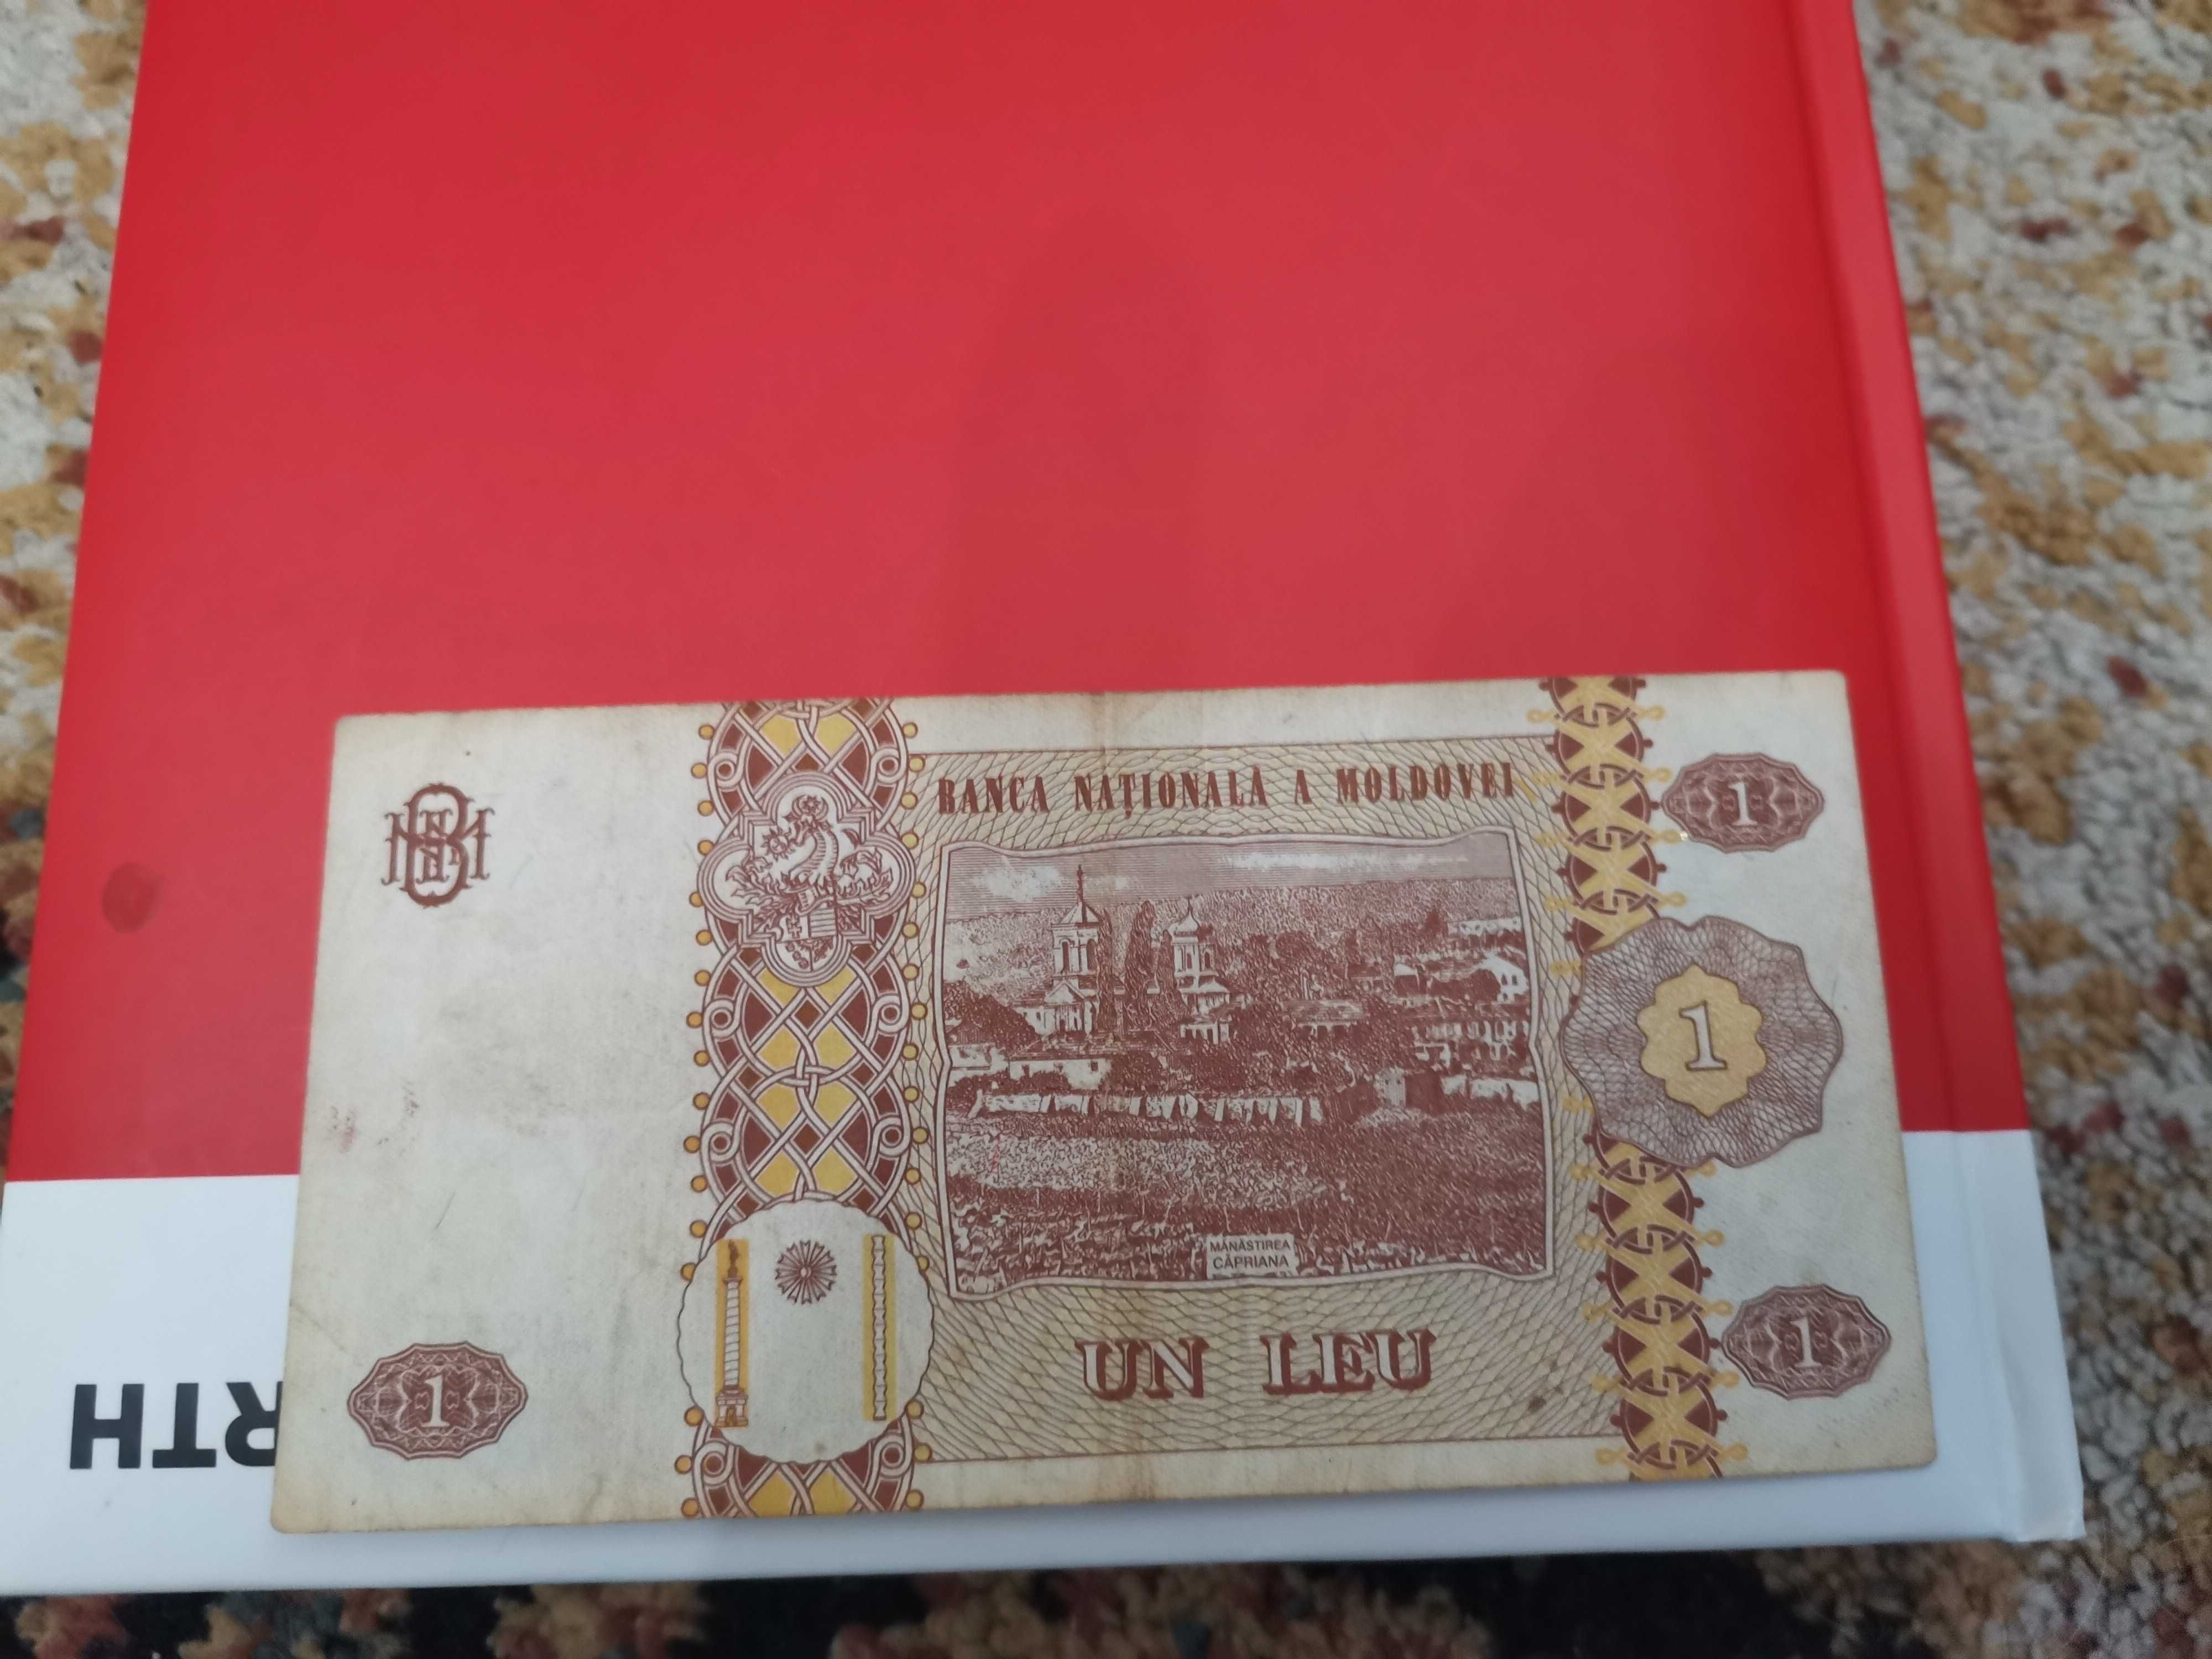 Bancnotă, 1 leu Republica Moldova